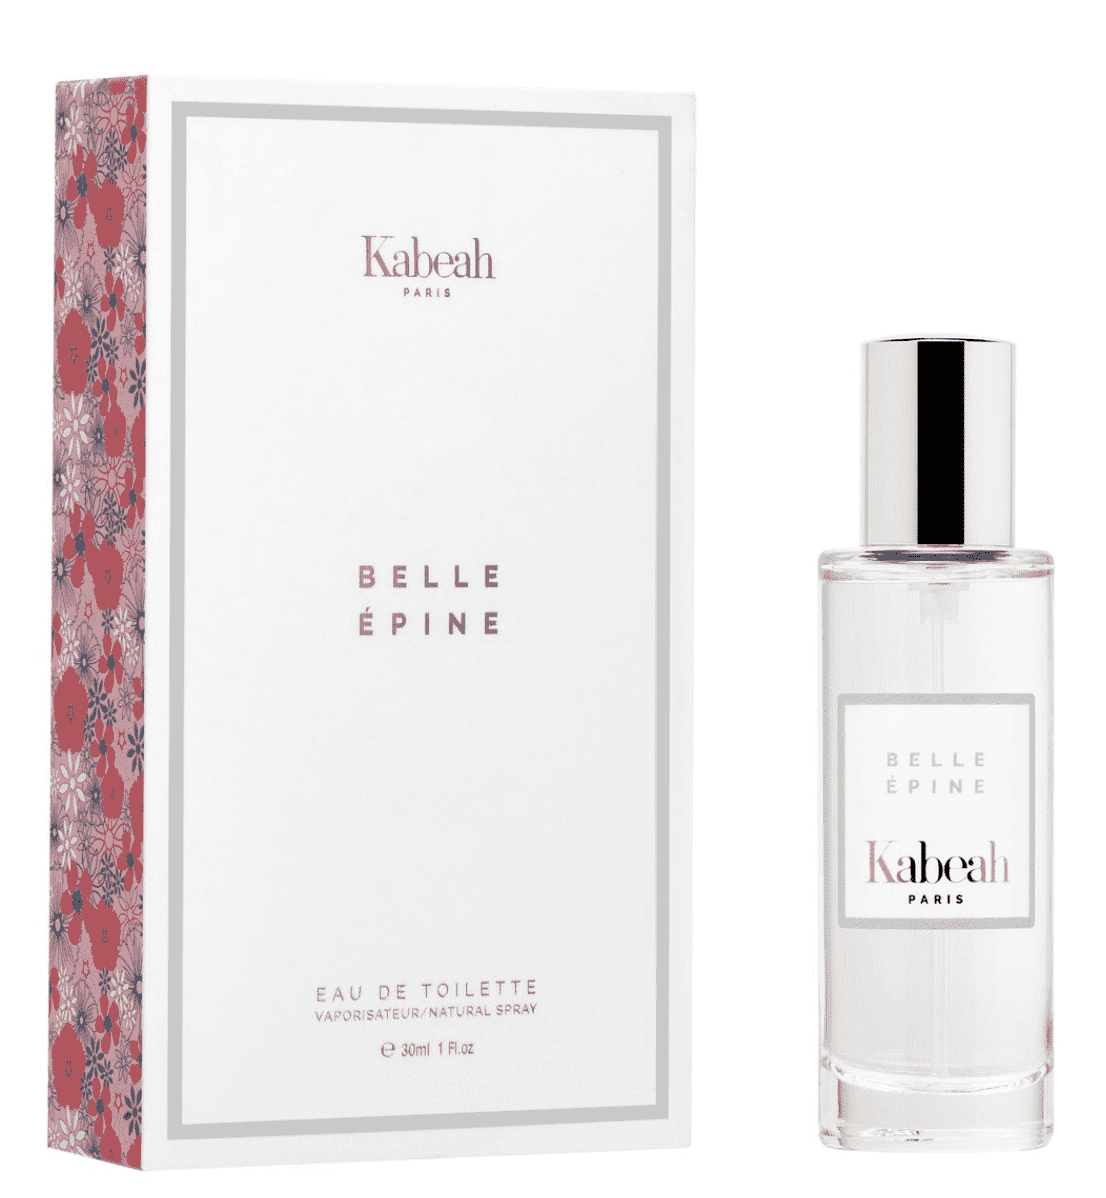  Belle Épine 2mL Kabeah Paris Perfumarie